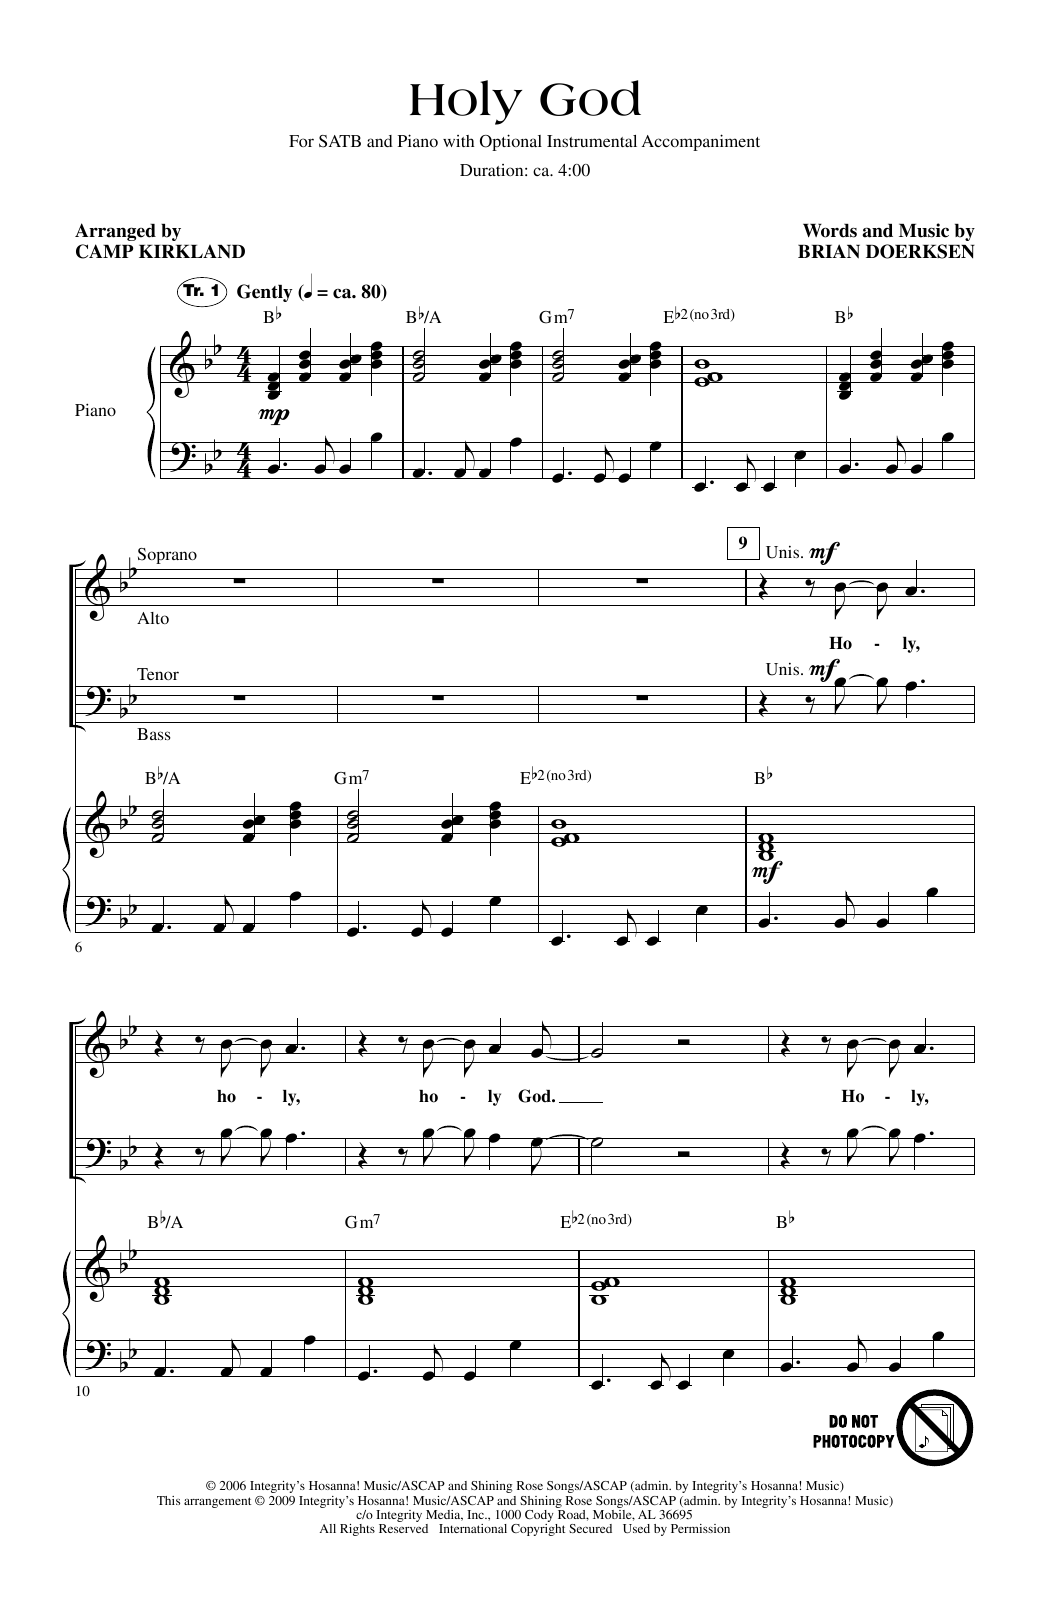 Brian Doerksen Holy God (arr. Camp Kirkland) Sheet Music Notes & Chords for SATB Choir - Download or Print PDF